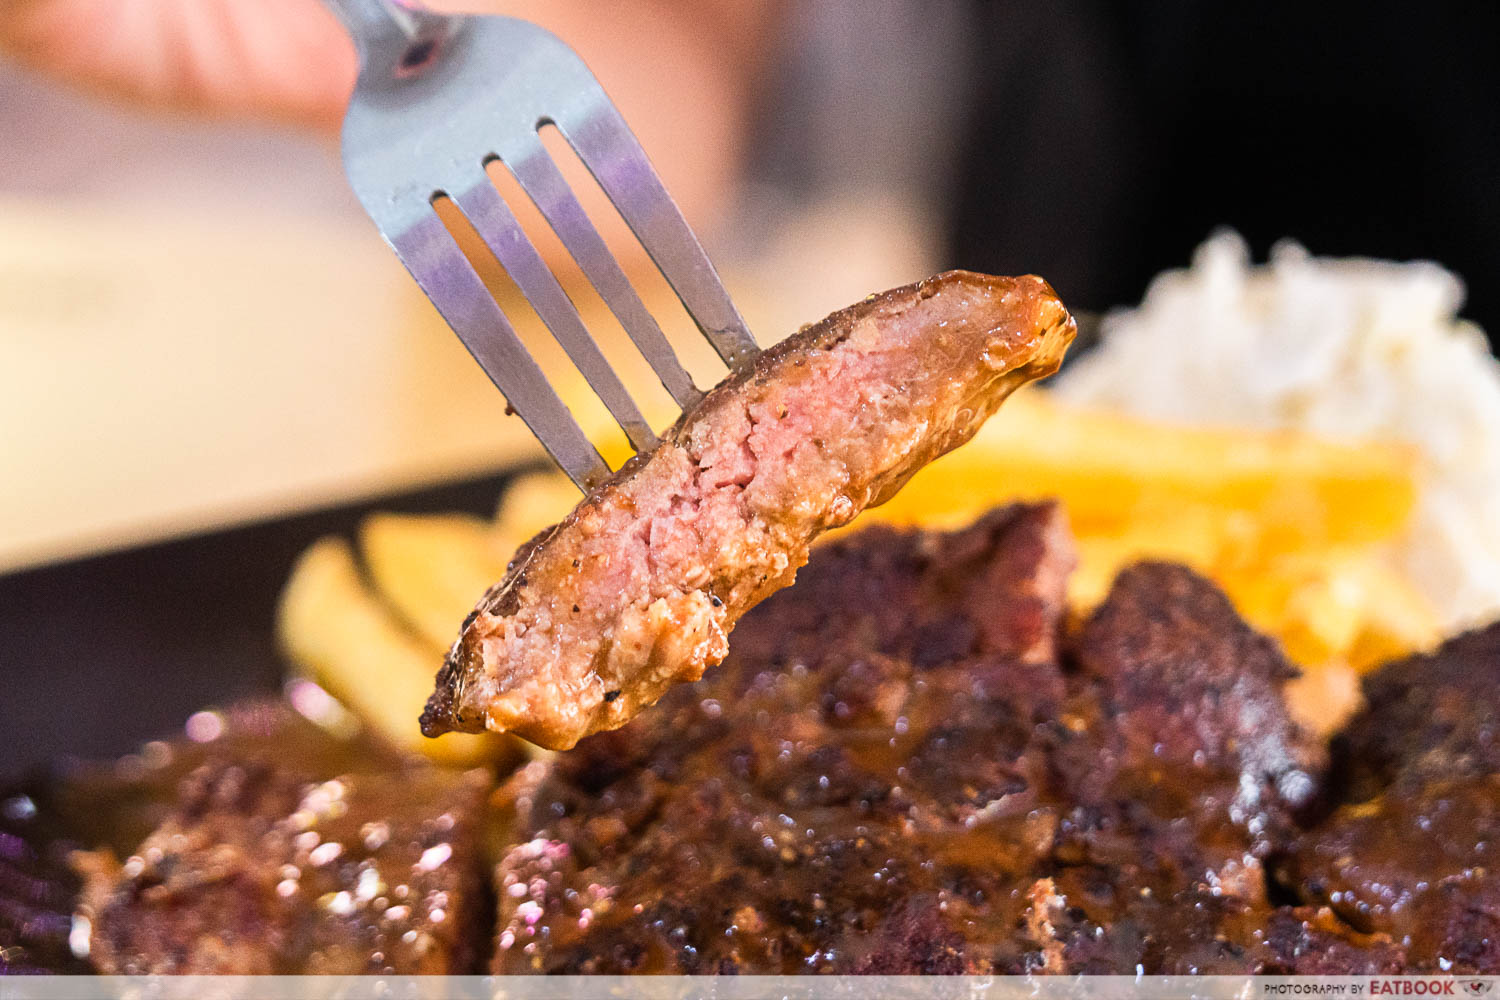 wow wow west - beef steak close up